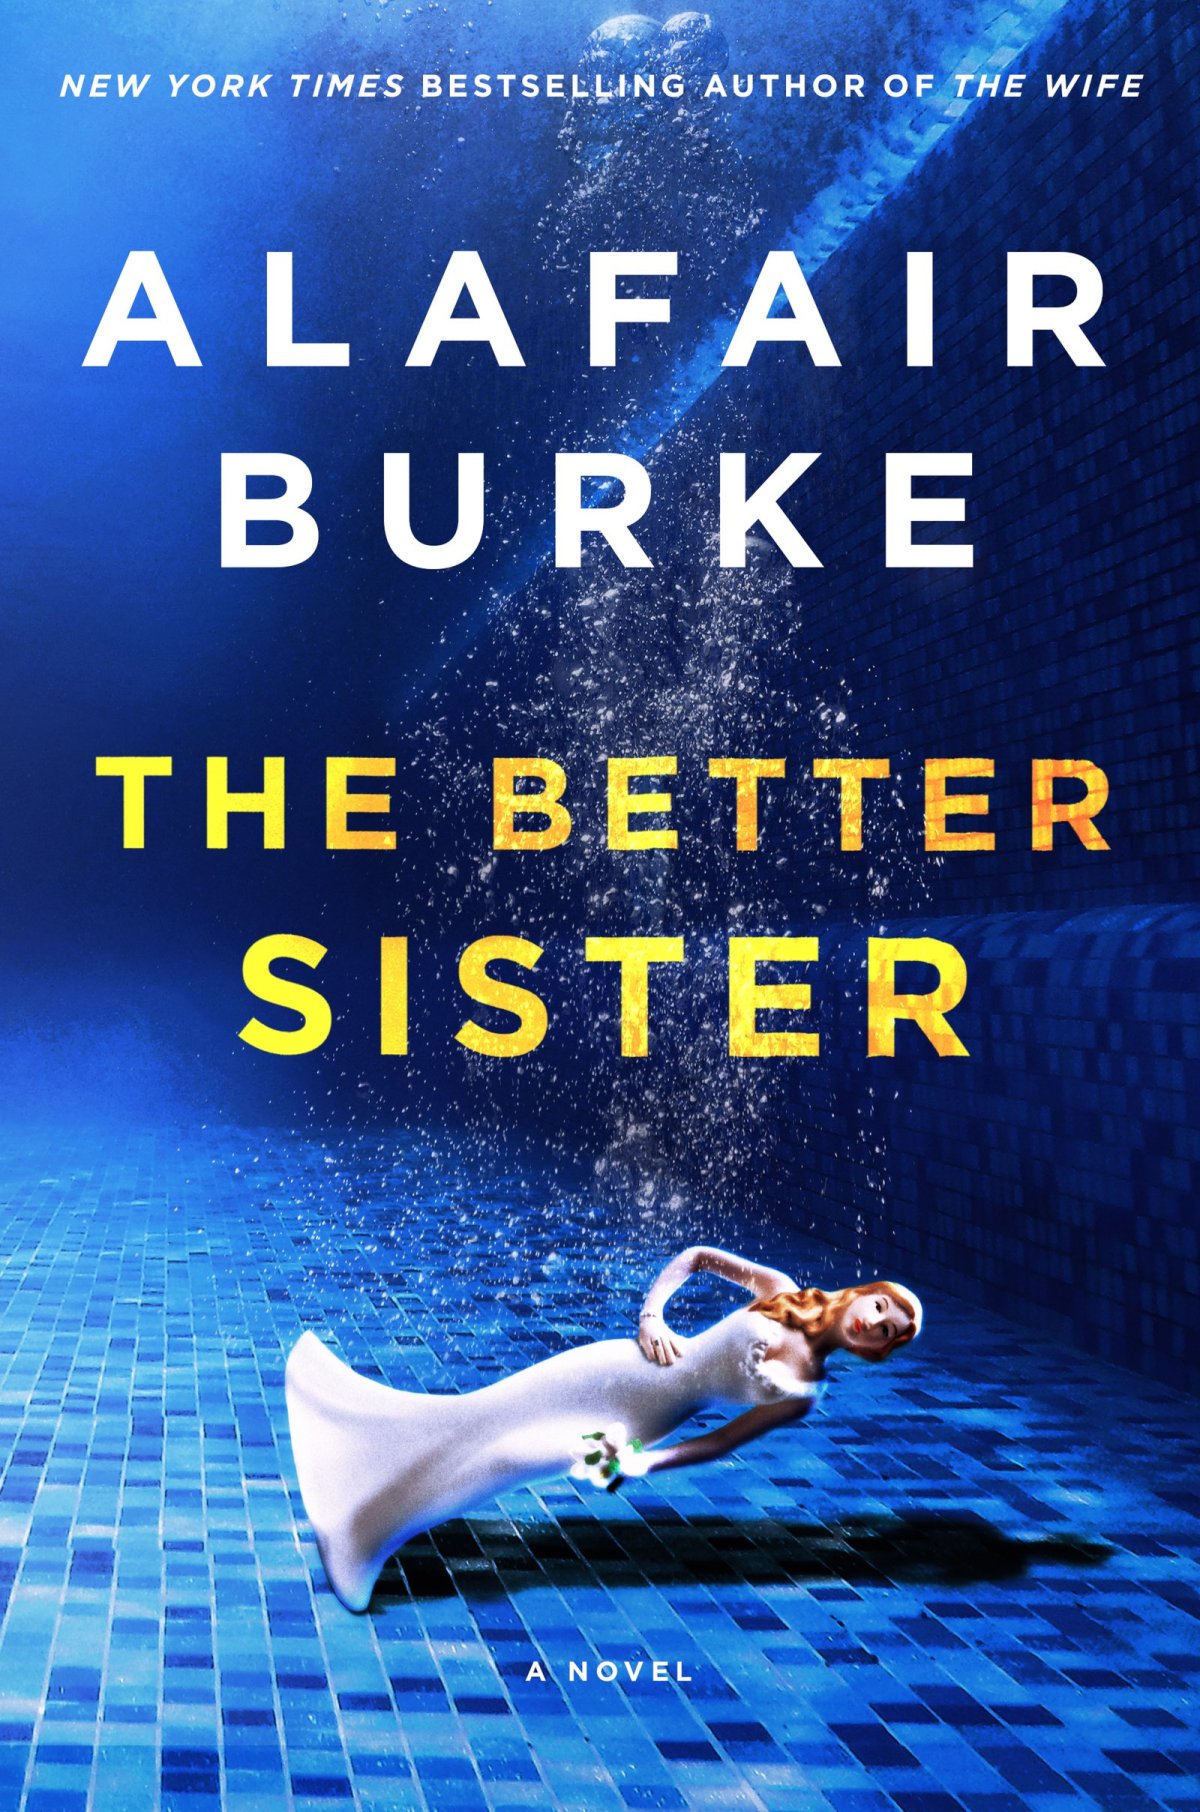 Book 154 – The Better Sister by Alafair Burke